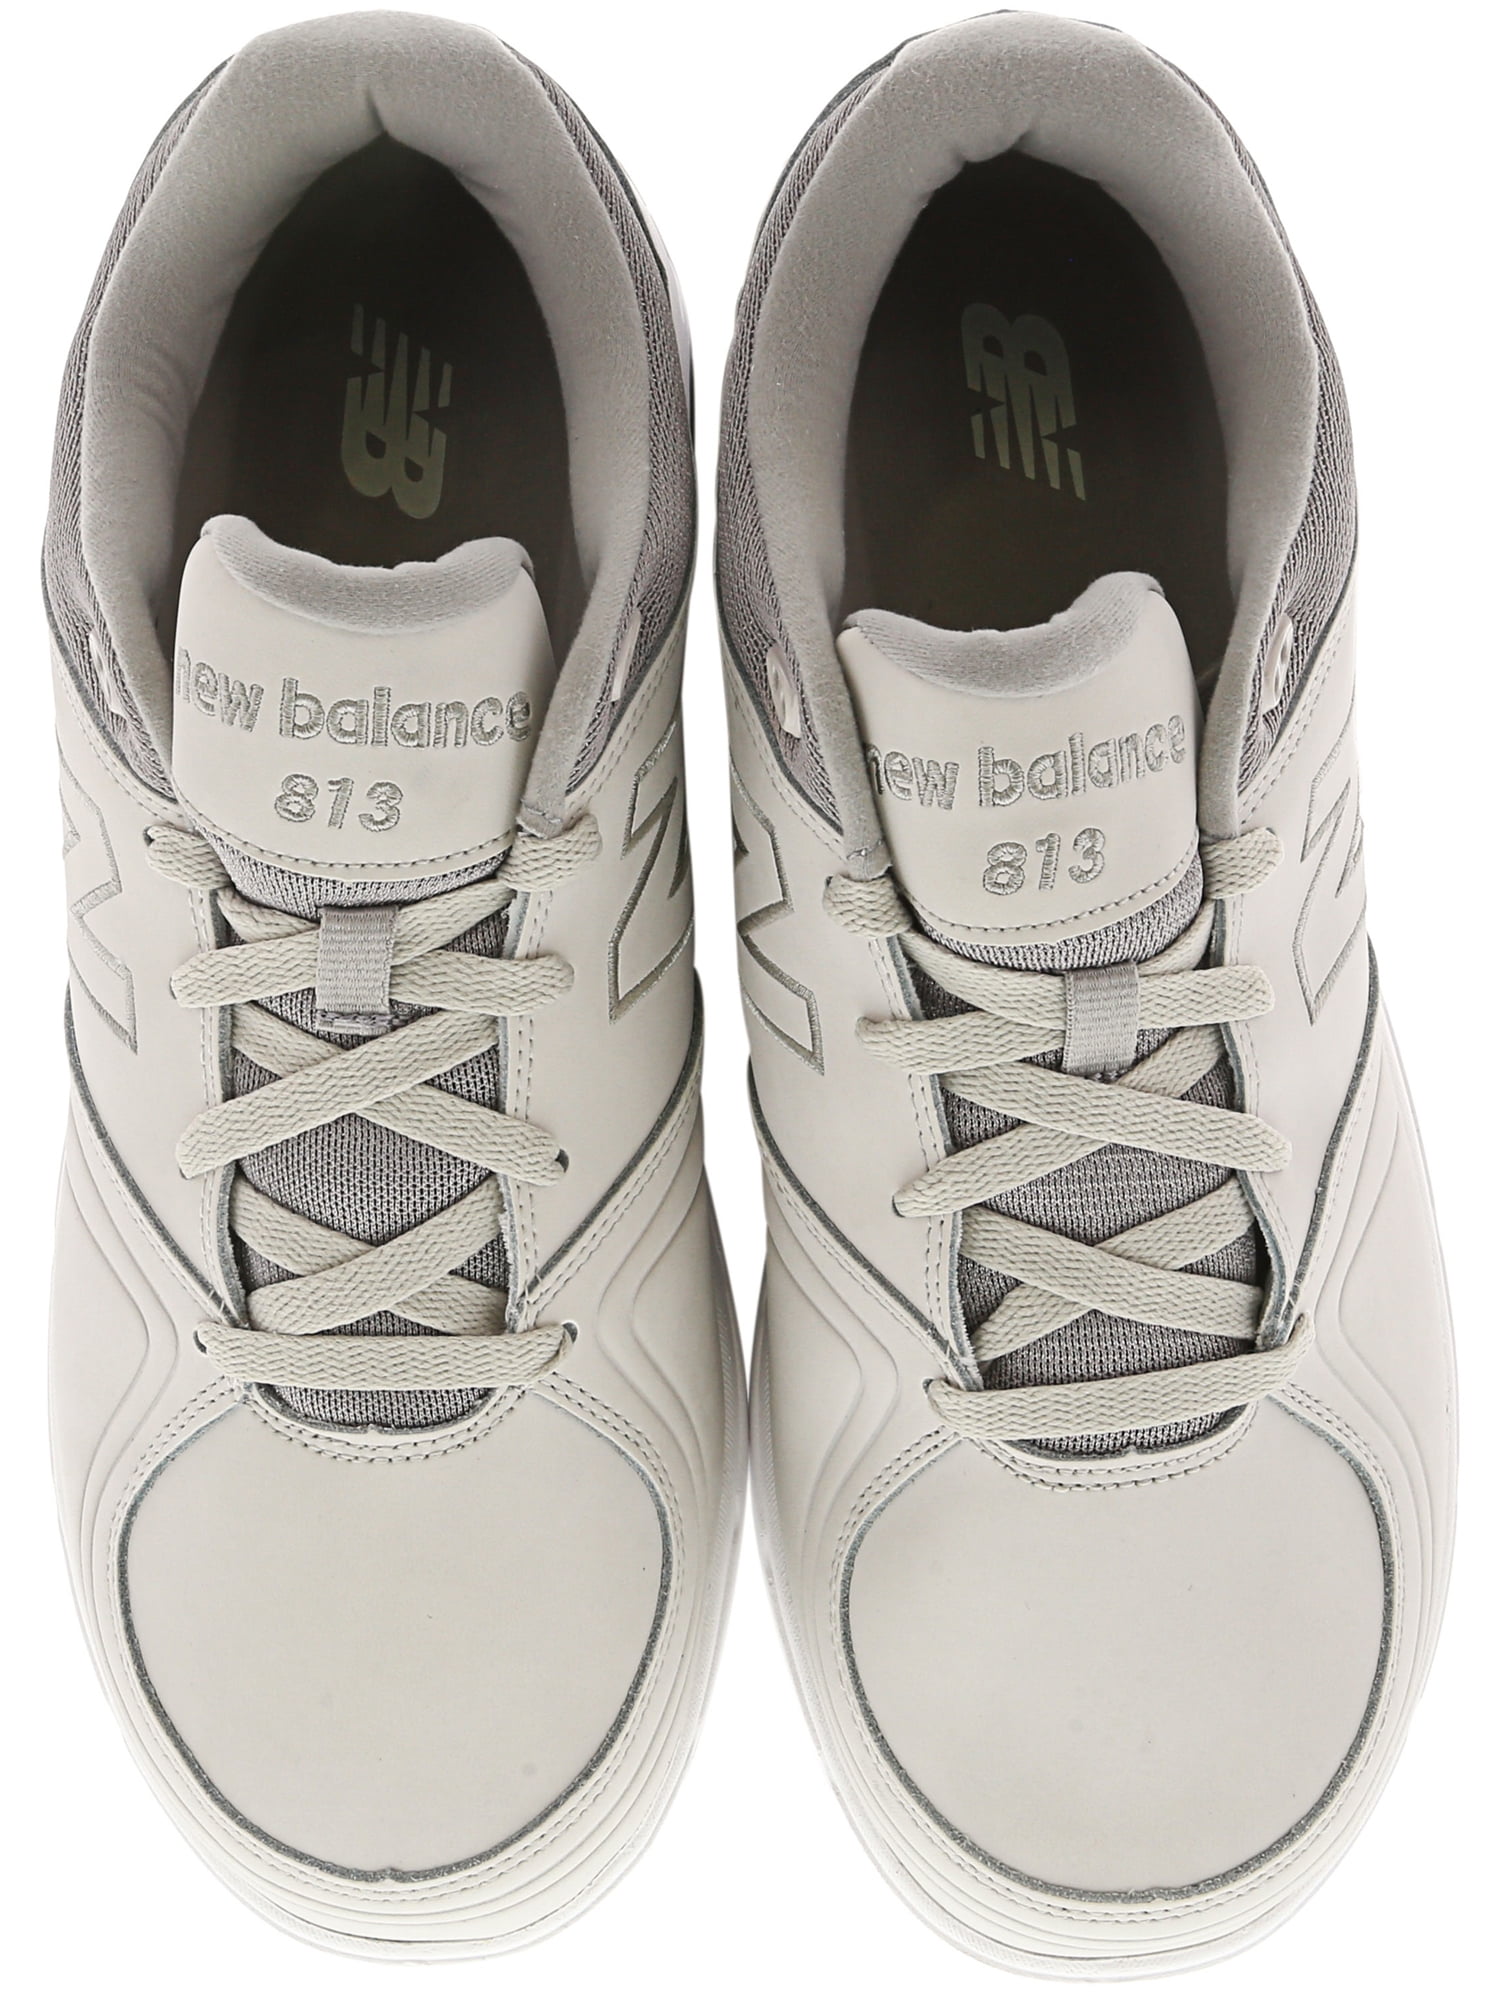 New Balance Women's Ww813 Gy1 Ankle-High Leather Walking Shoe - 7WW ...